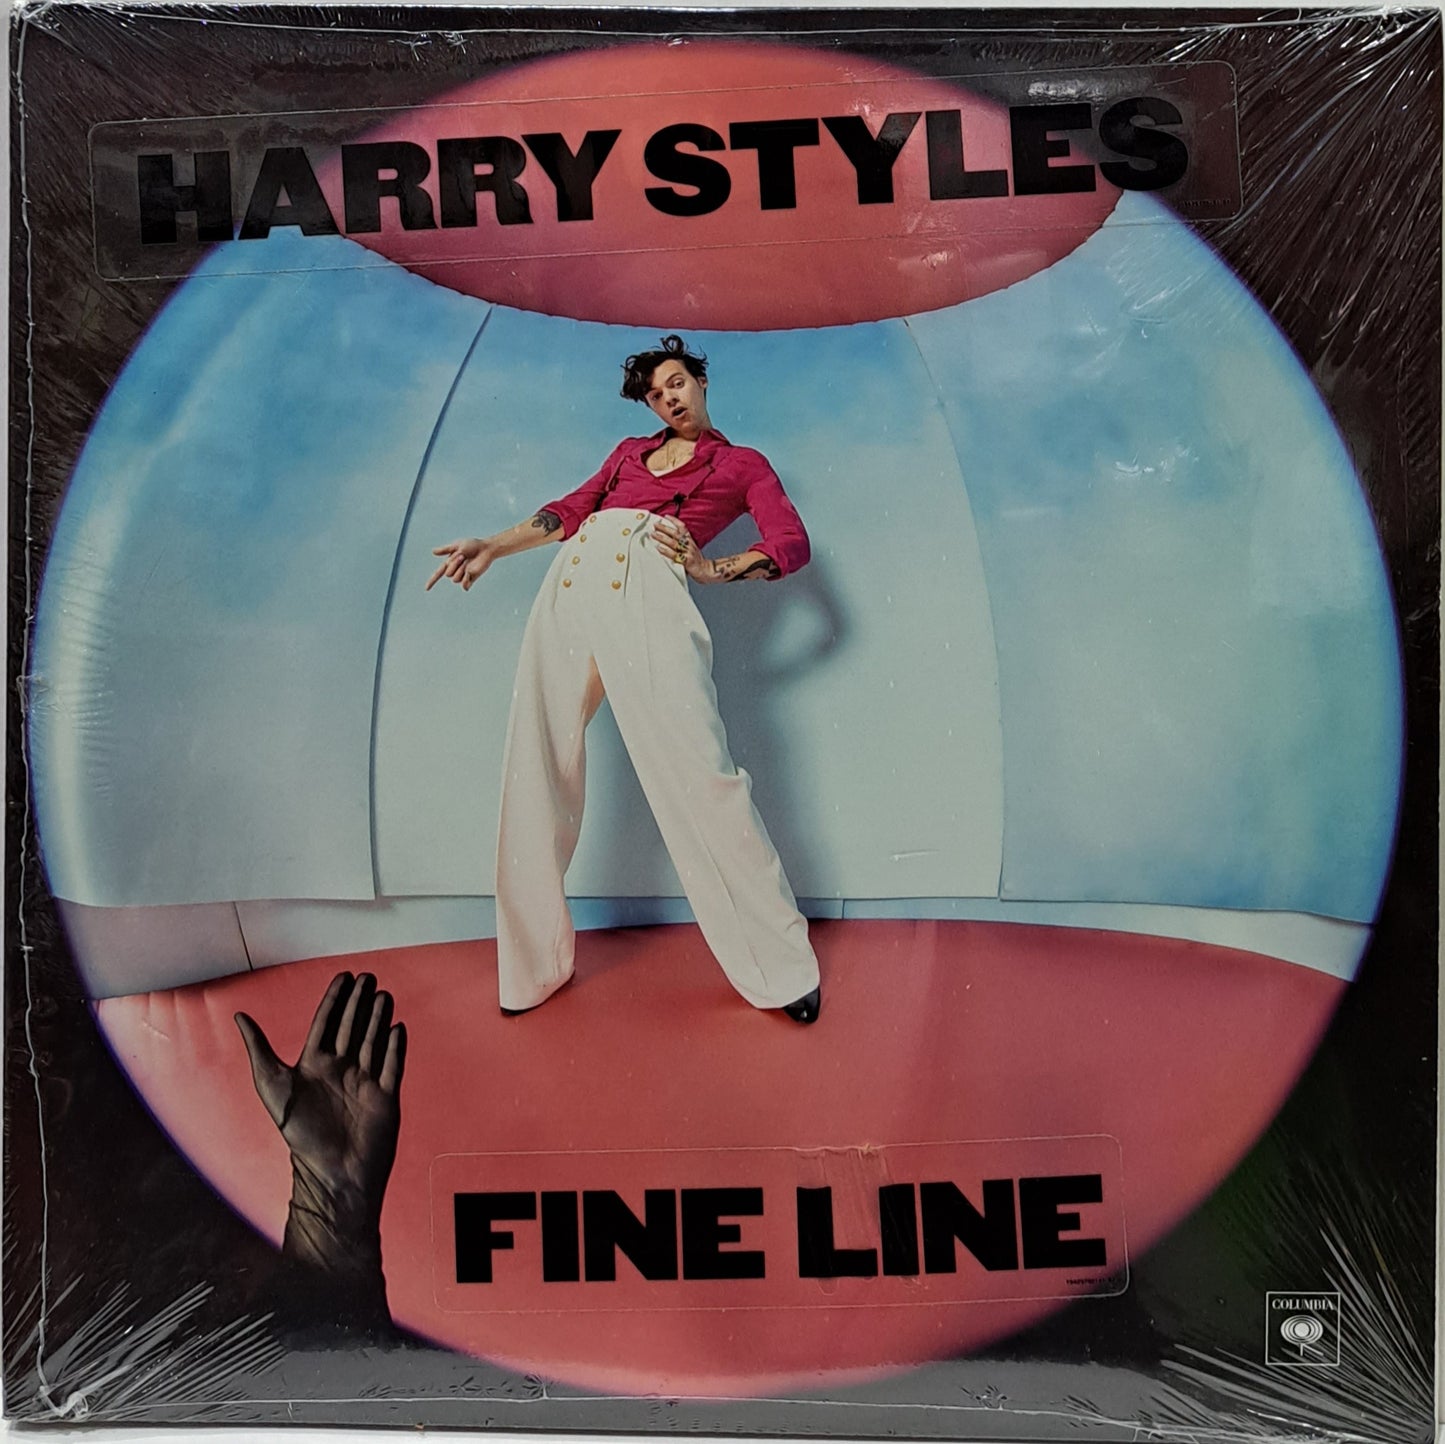 HARRY STYLE - FINE LINE  2 LPS